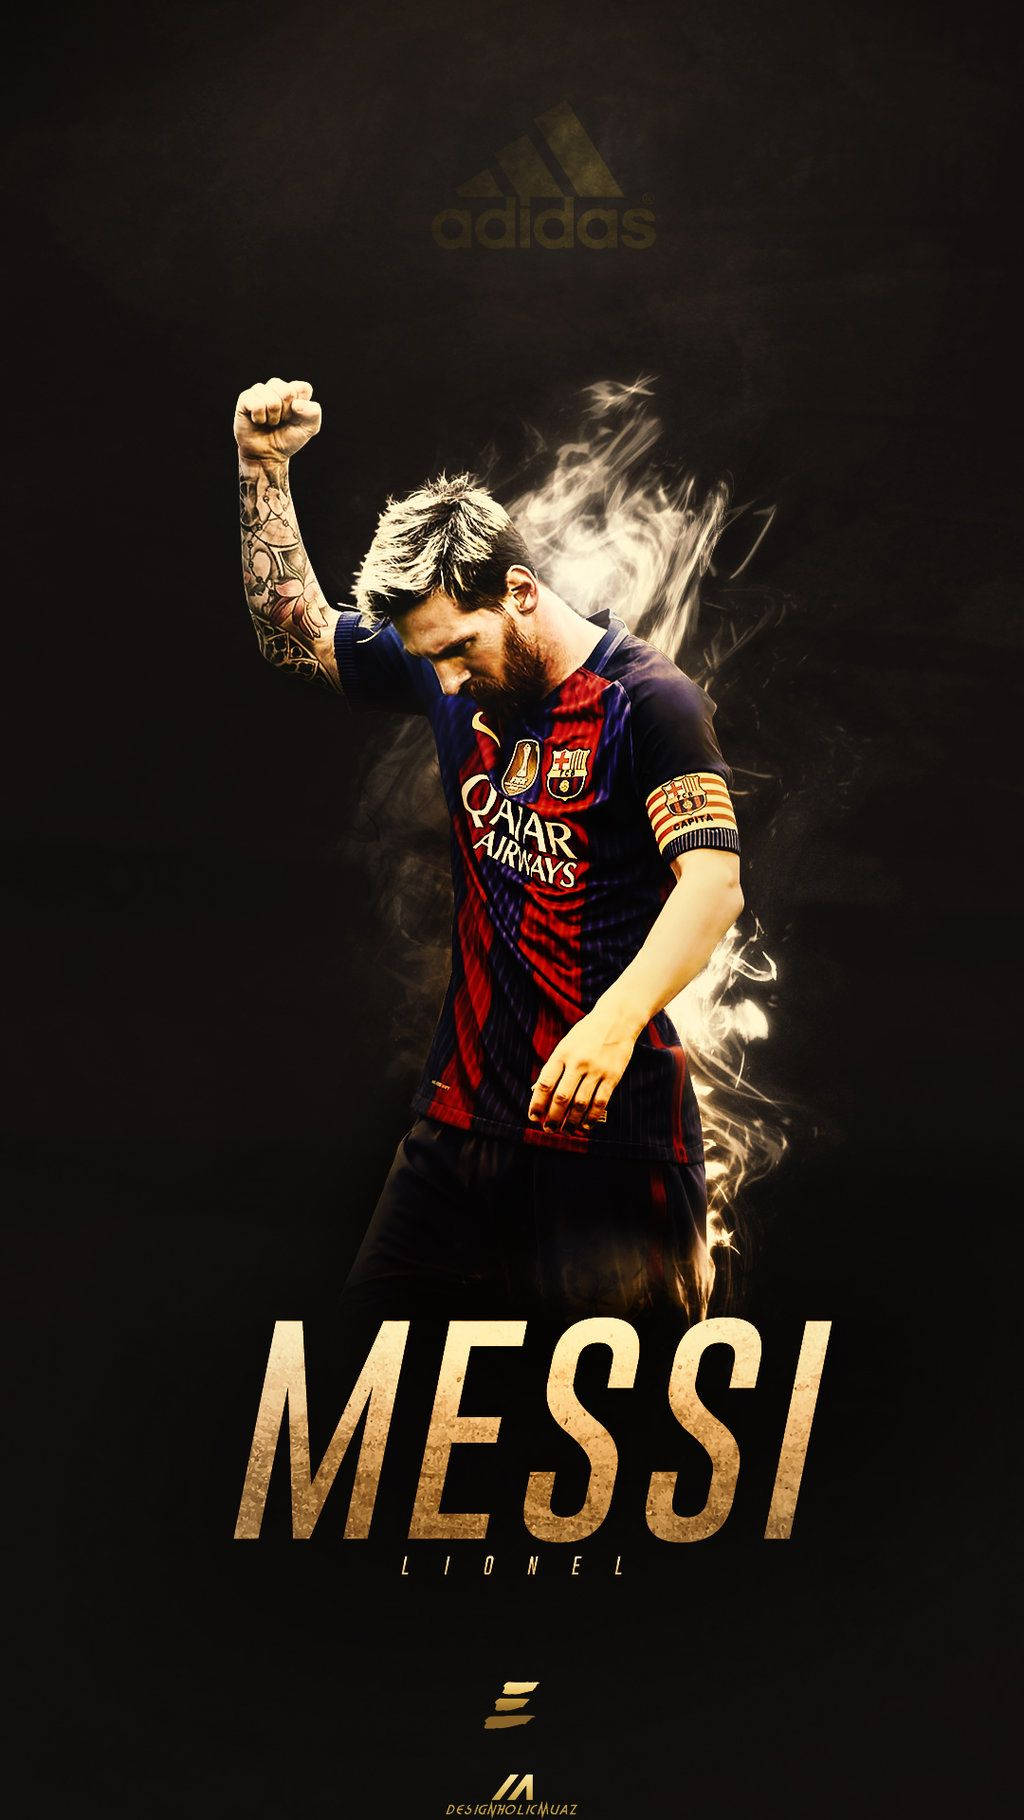 Messi Lionel Fist Pump